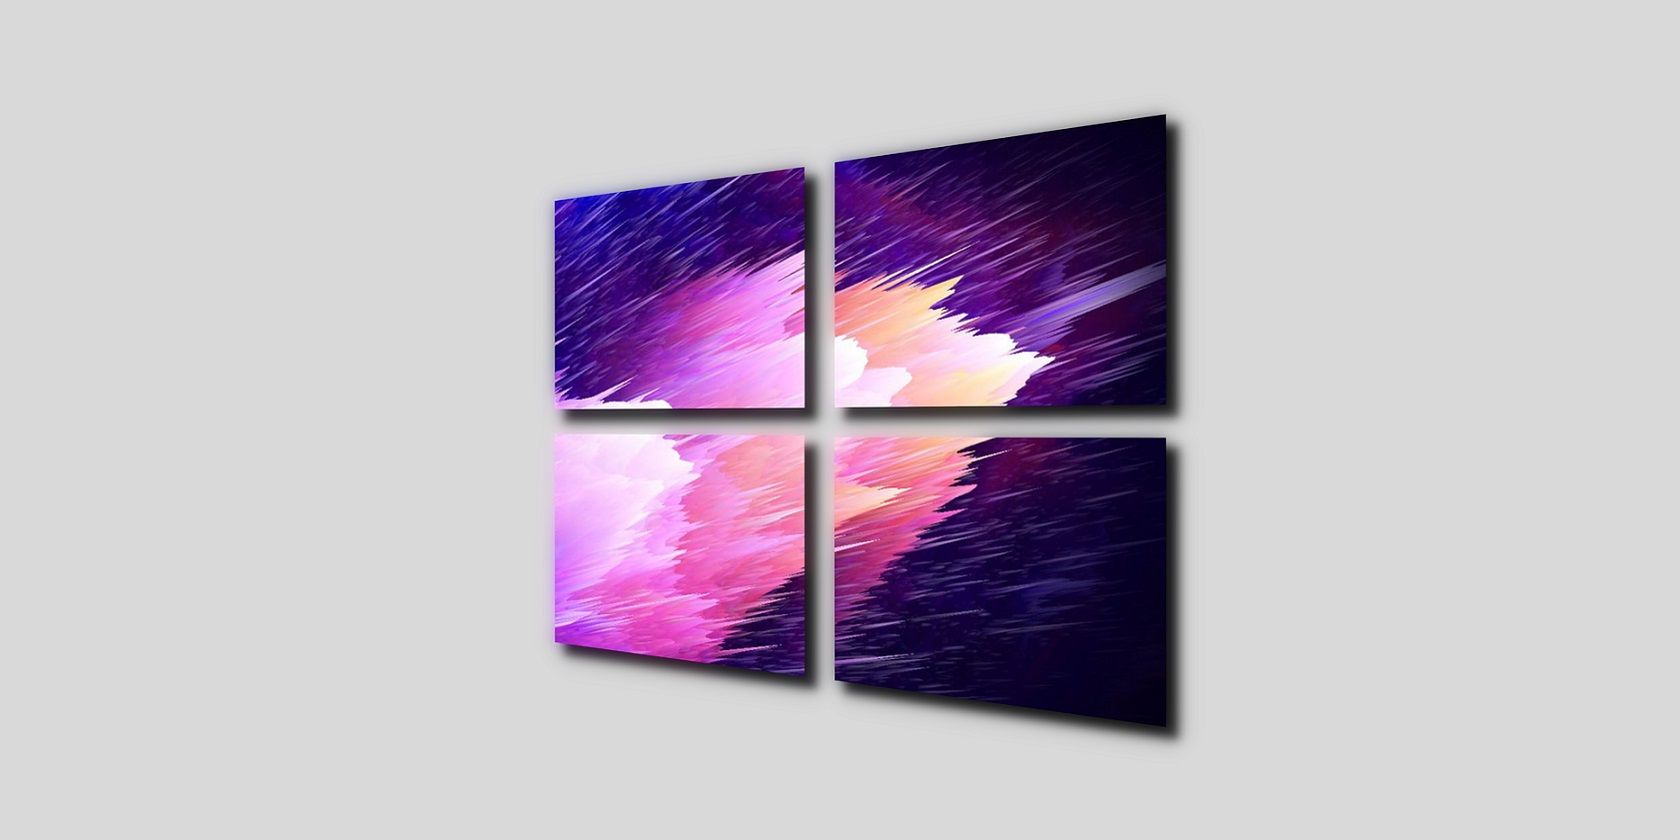 The Microsoft Windows logo 